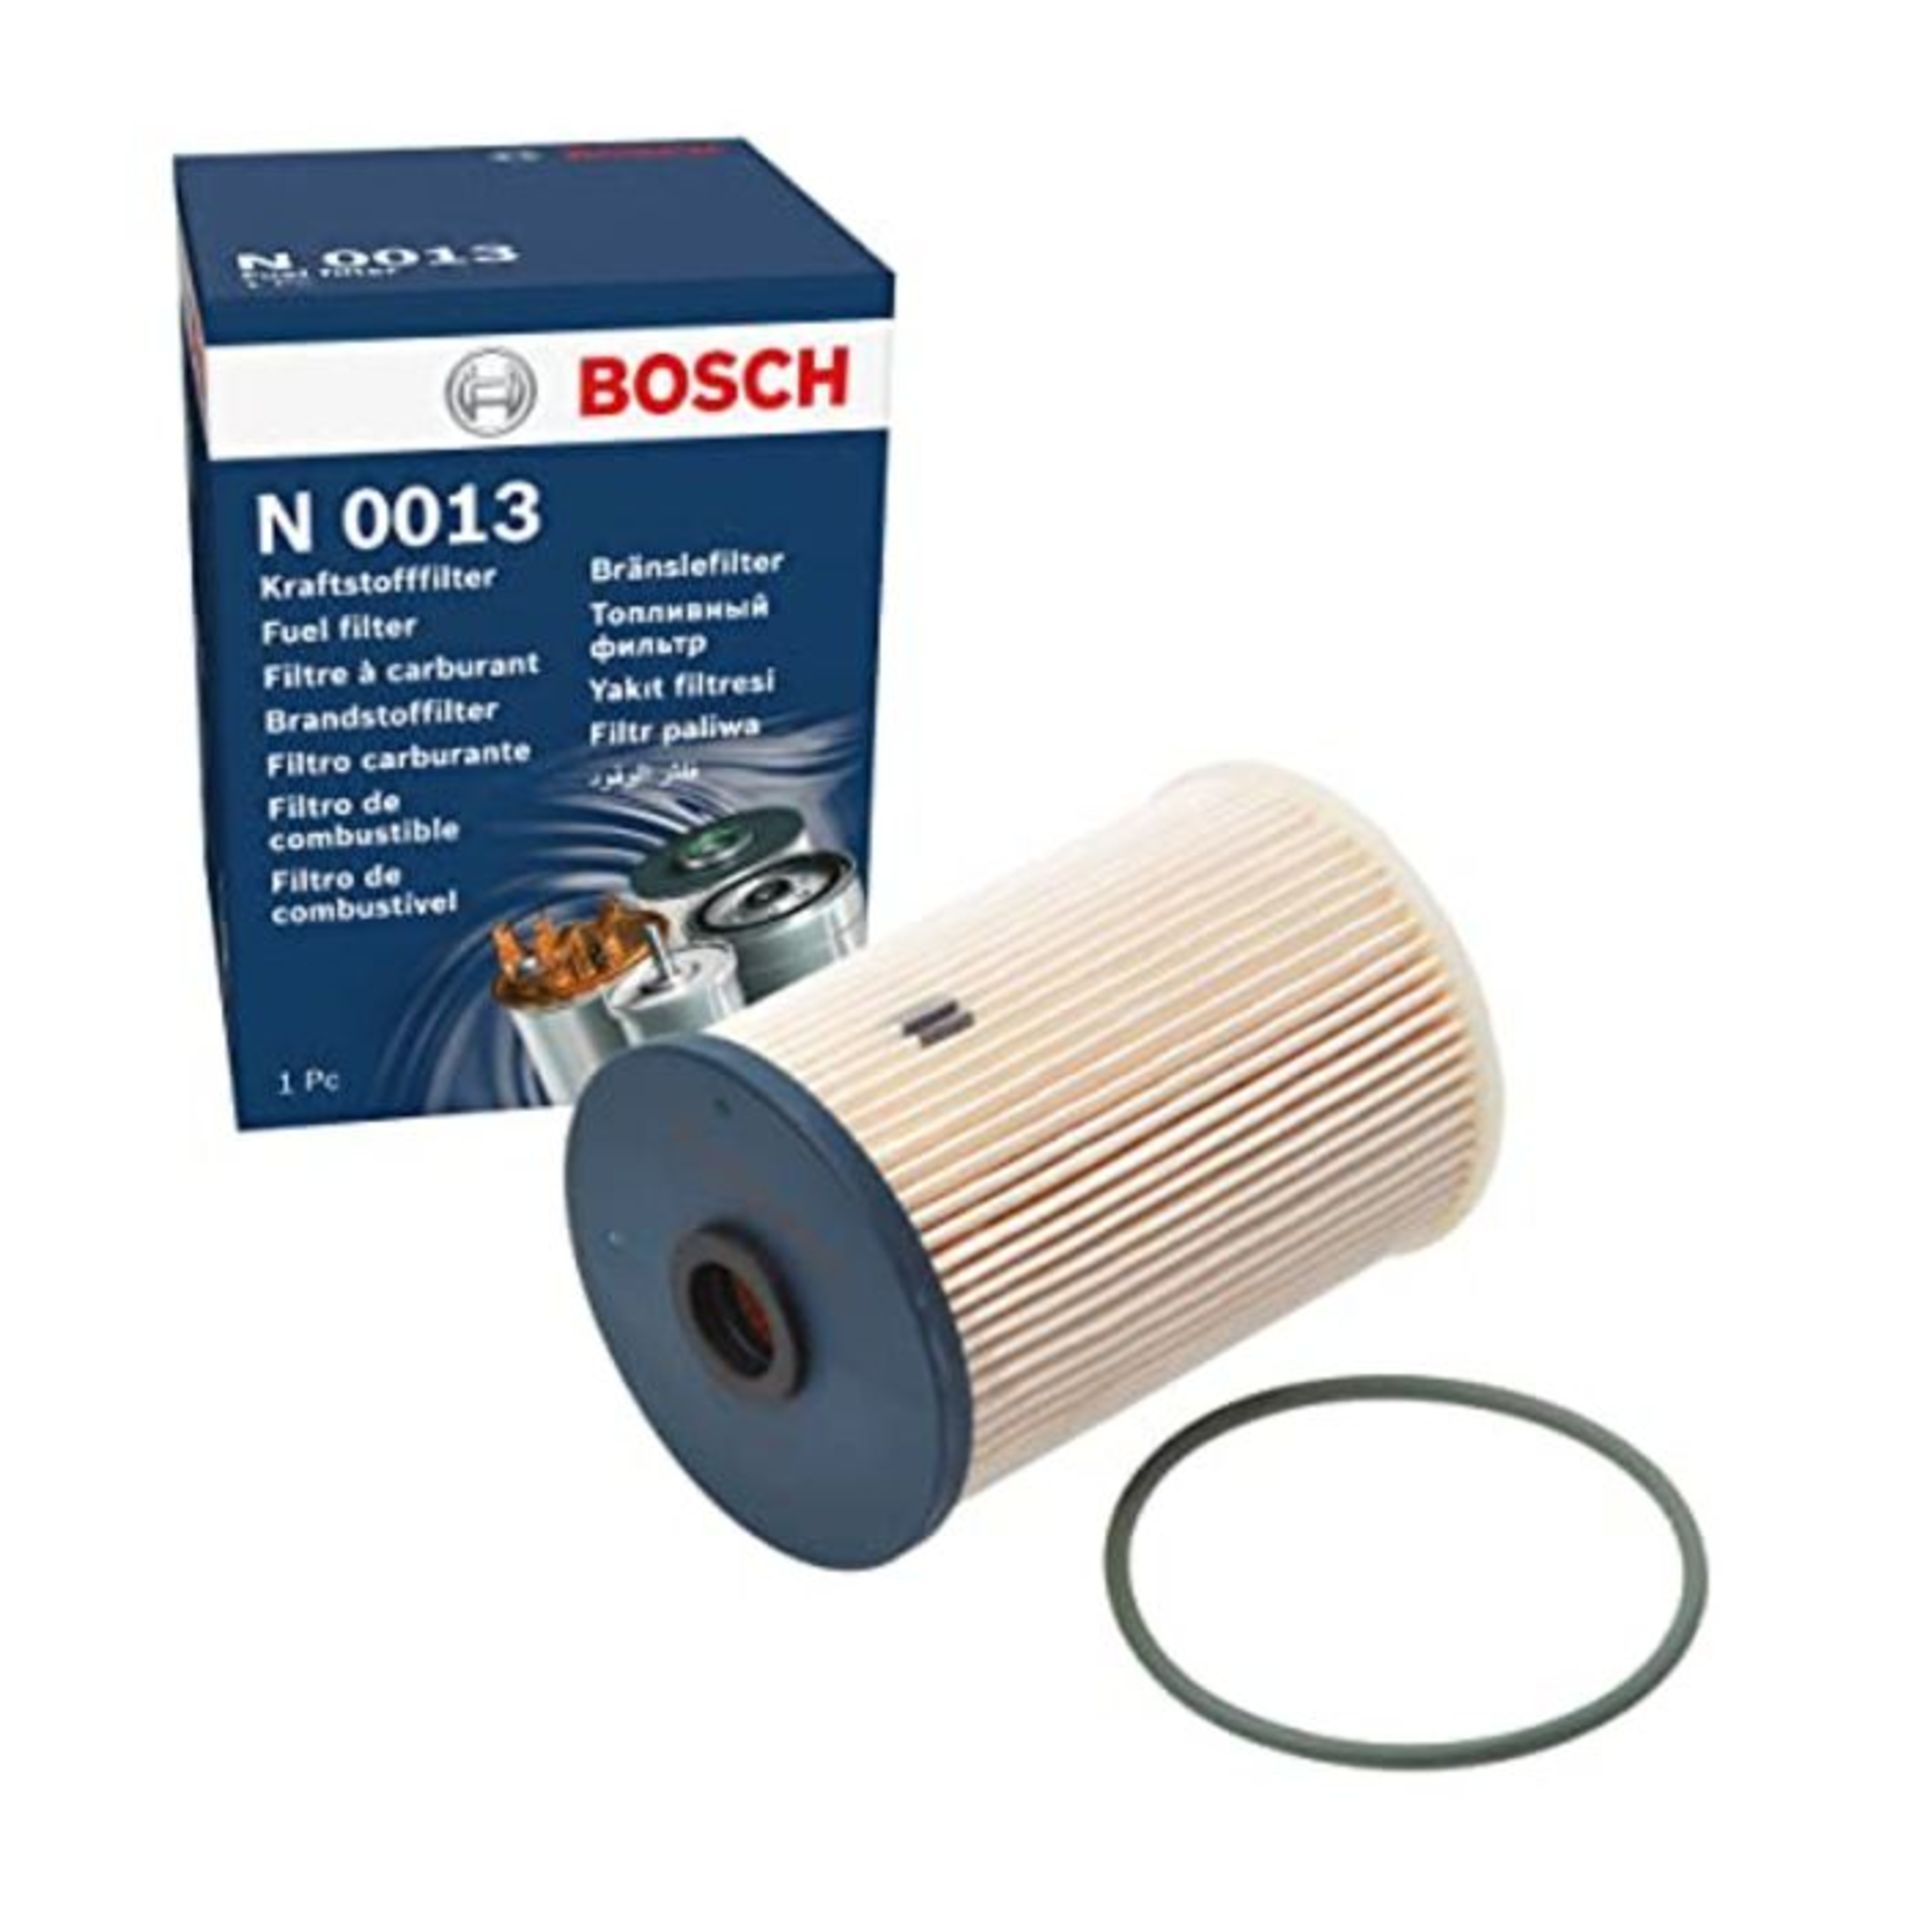 Bosch N0013 - Diesel Filter Car